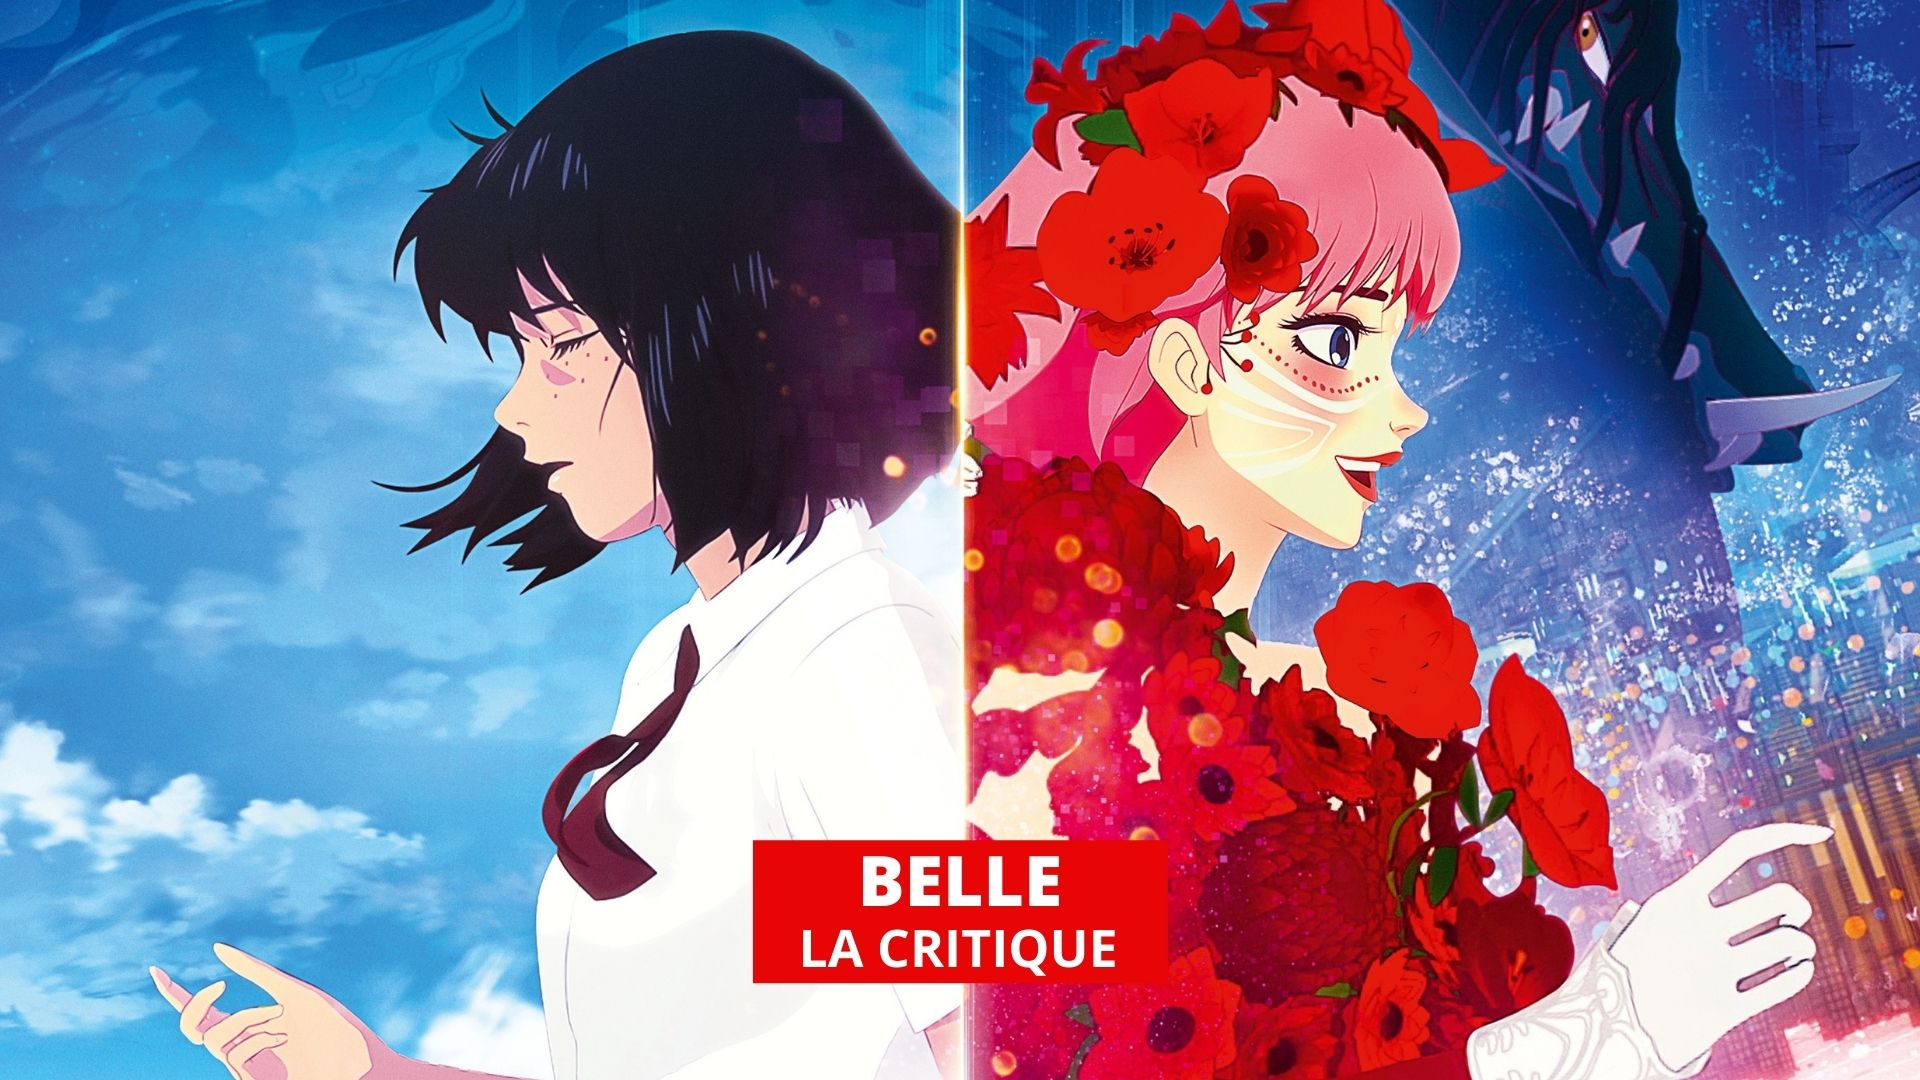 Belle : un conte virtuel sublime signé Mamoru Hosoda